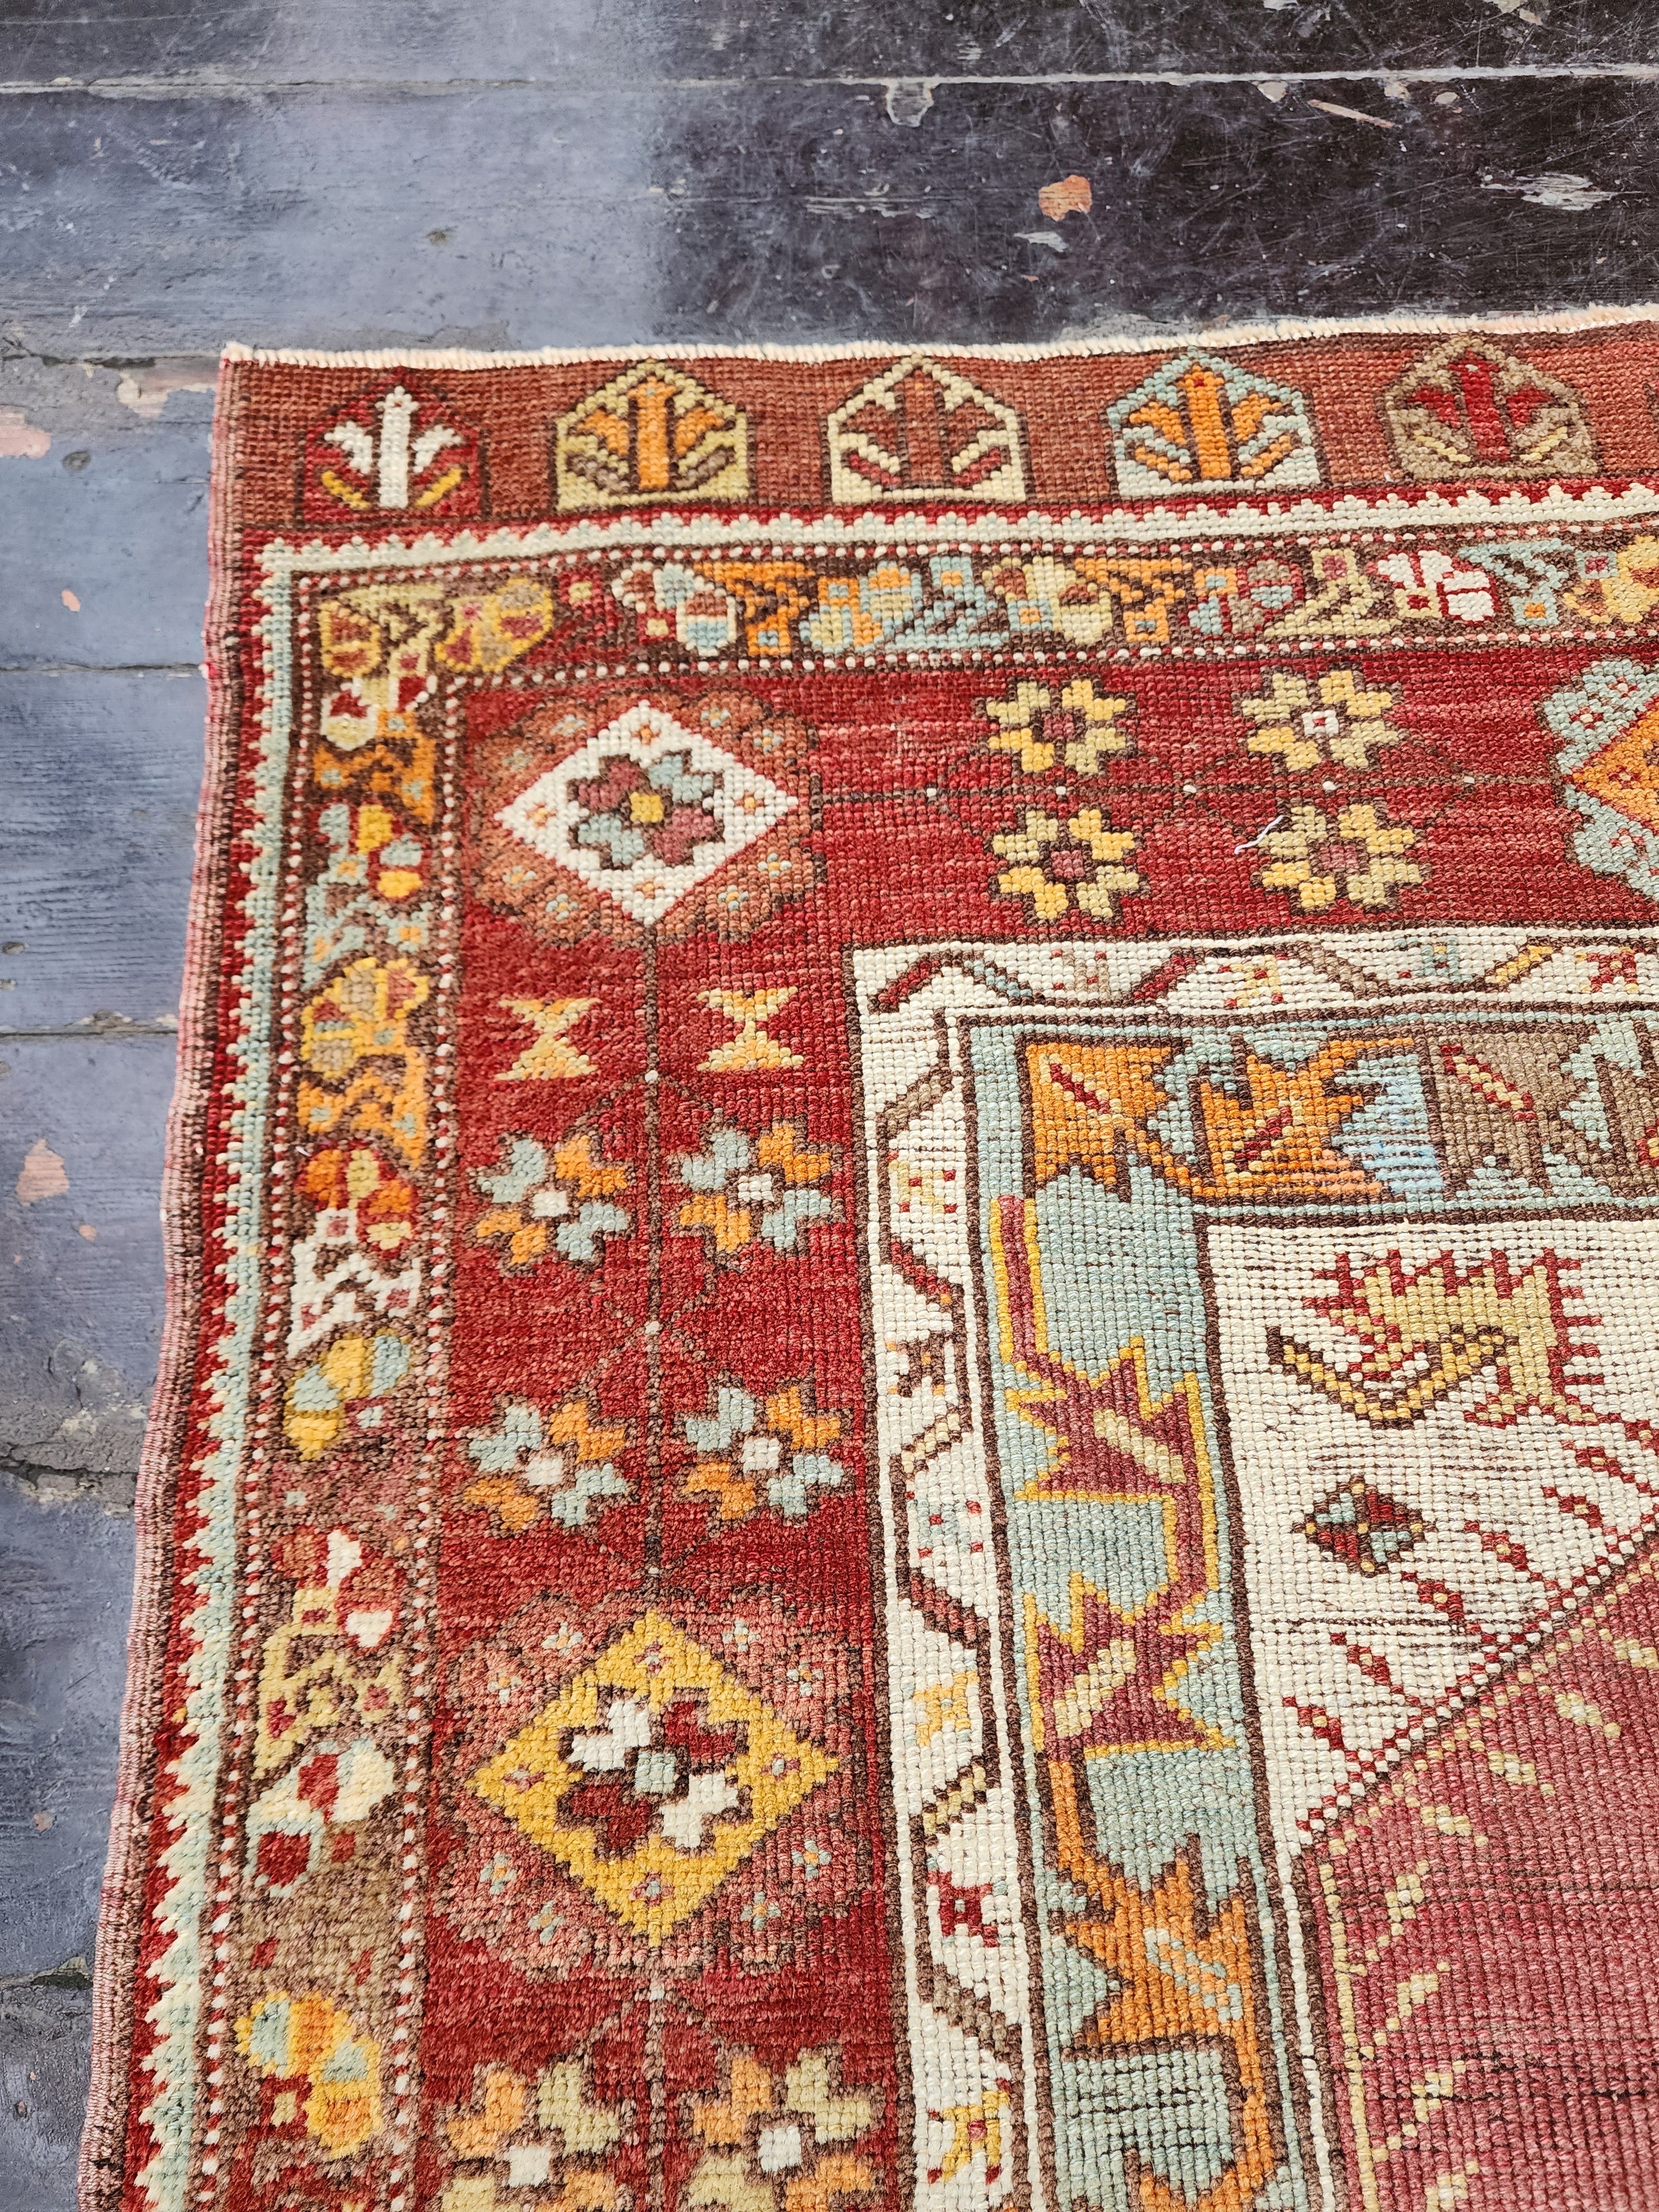 Antique Konya Turkish Rug, Vintage Prayer Rug, Bohemian Tribal Nomadic Rustic Rug, Handmade Wool Rug, Moroccan Style Persian Area Rug, 5’7”x3’5”